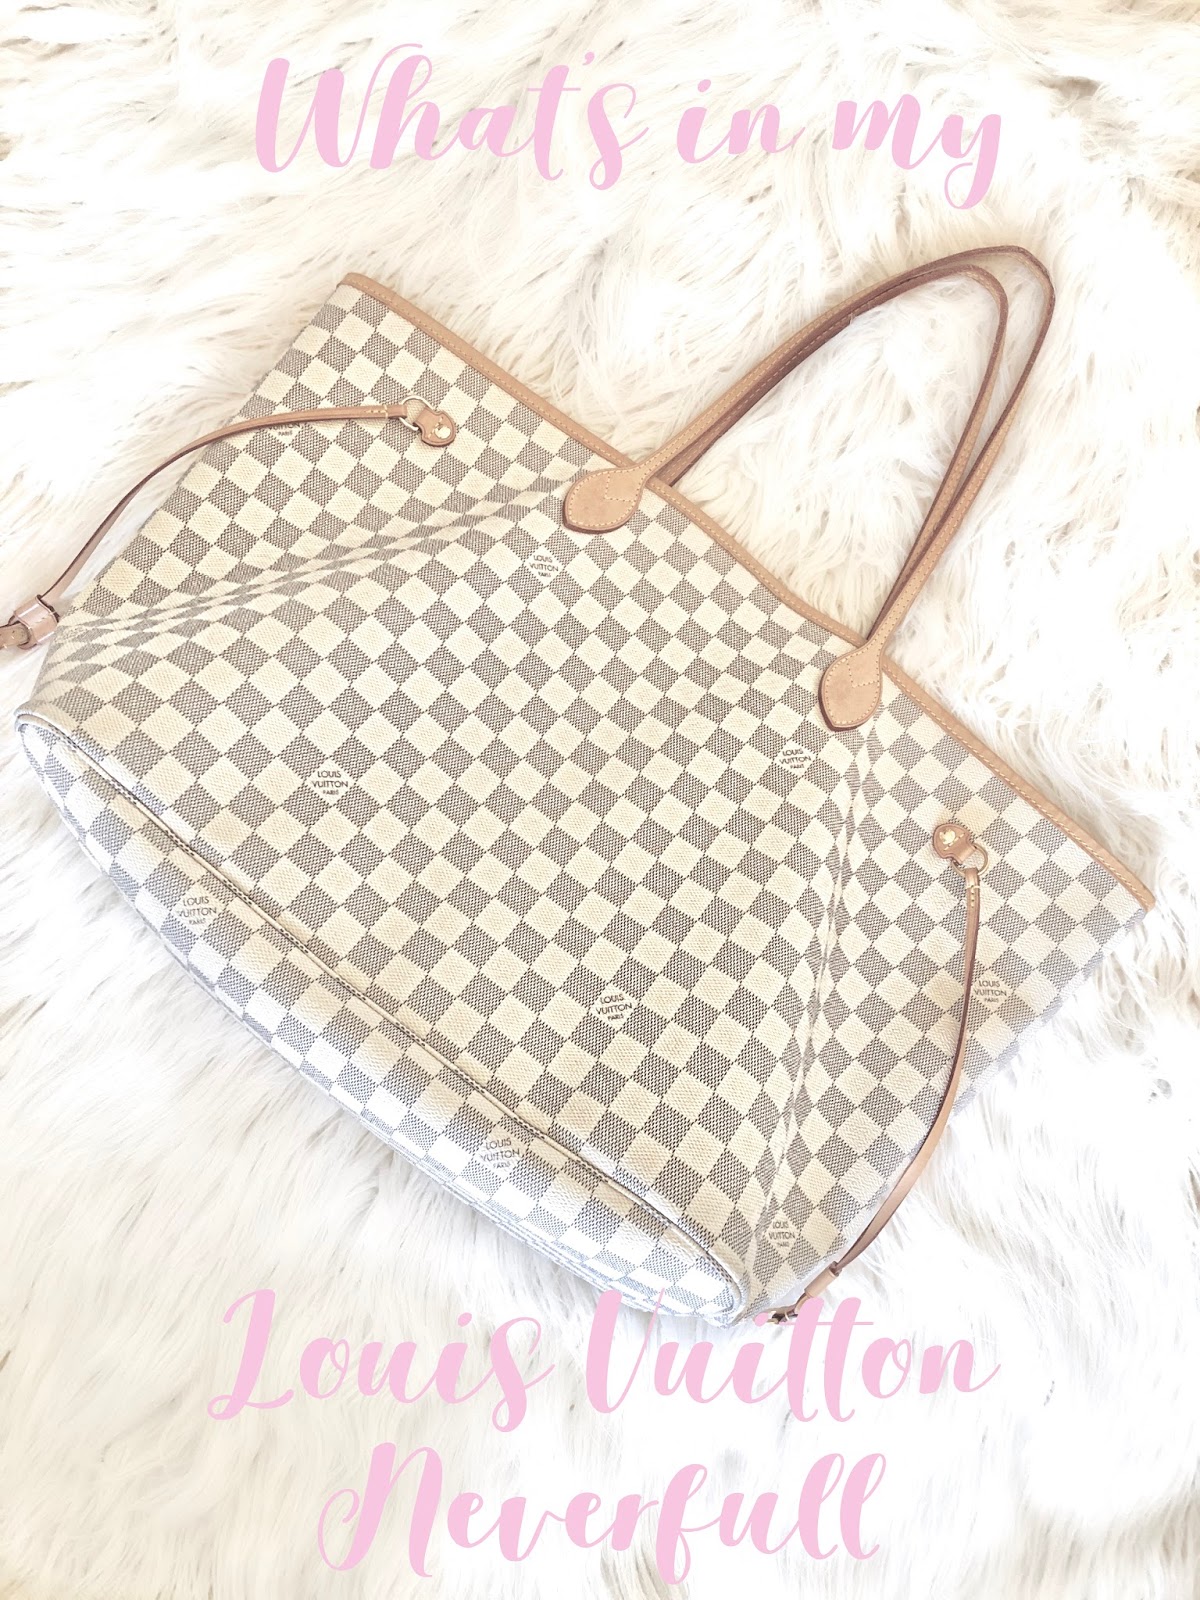 Using Louis Vuitton As A School Bag